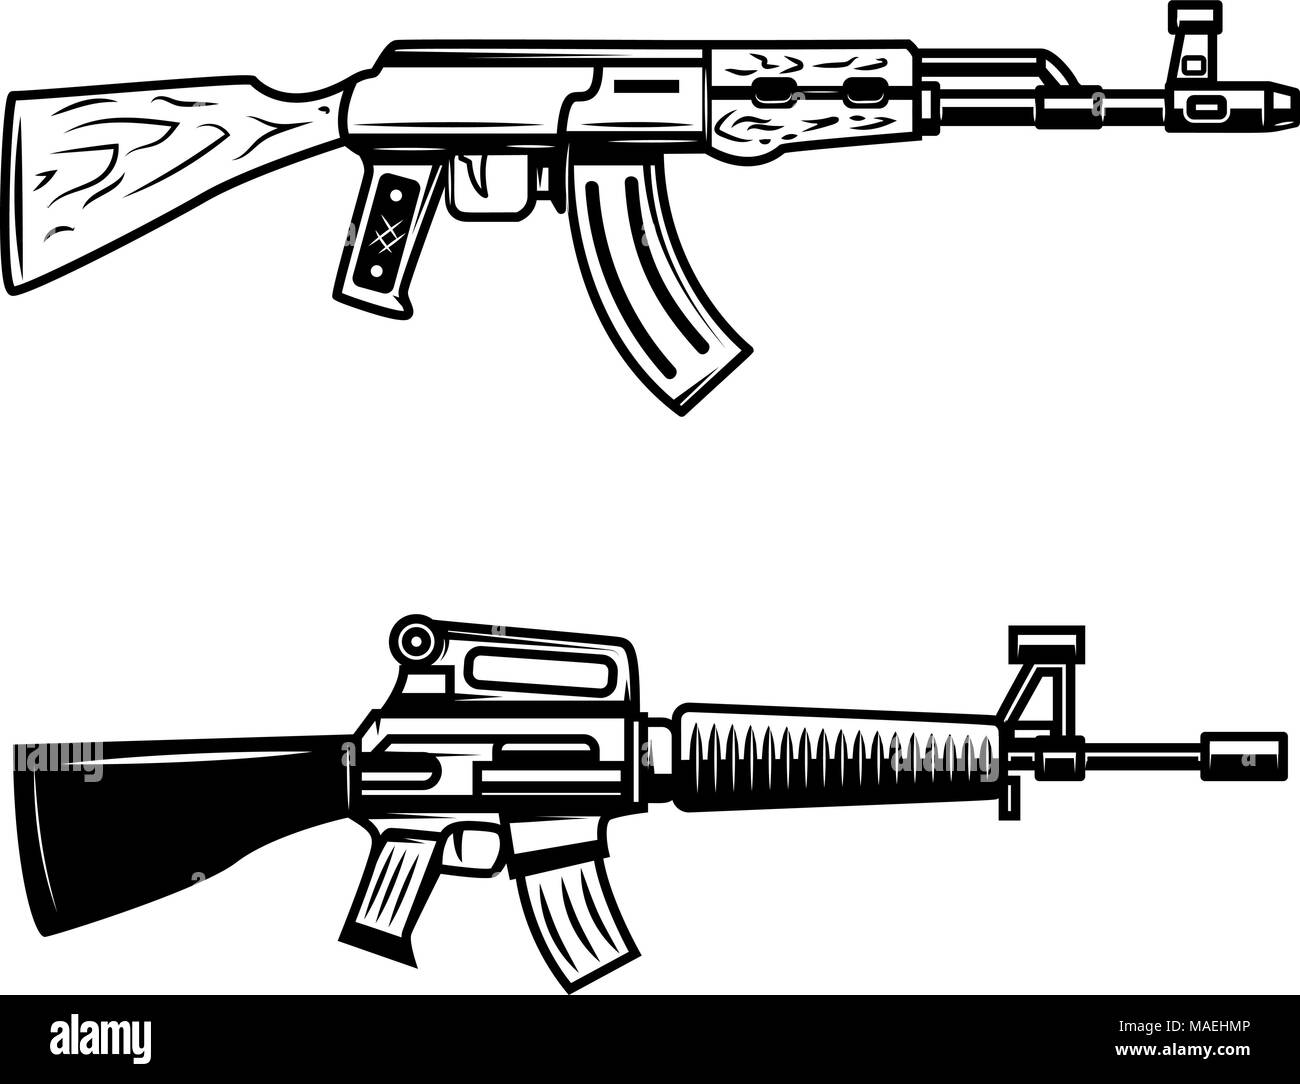 Kalashnikov, m16 automatic rifle. Design element for emblem, sign, poster, t shirt. Vector illustration Stock Vector